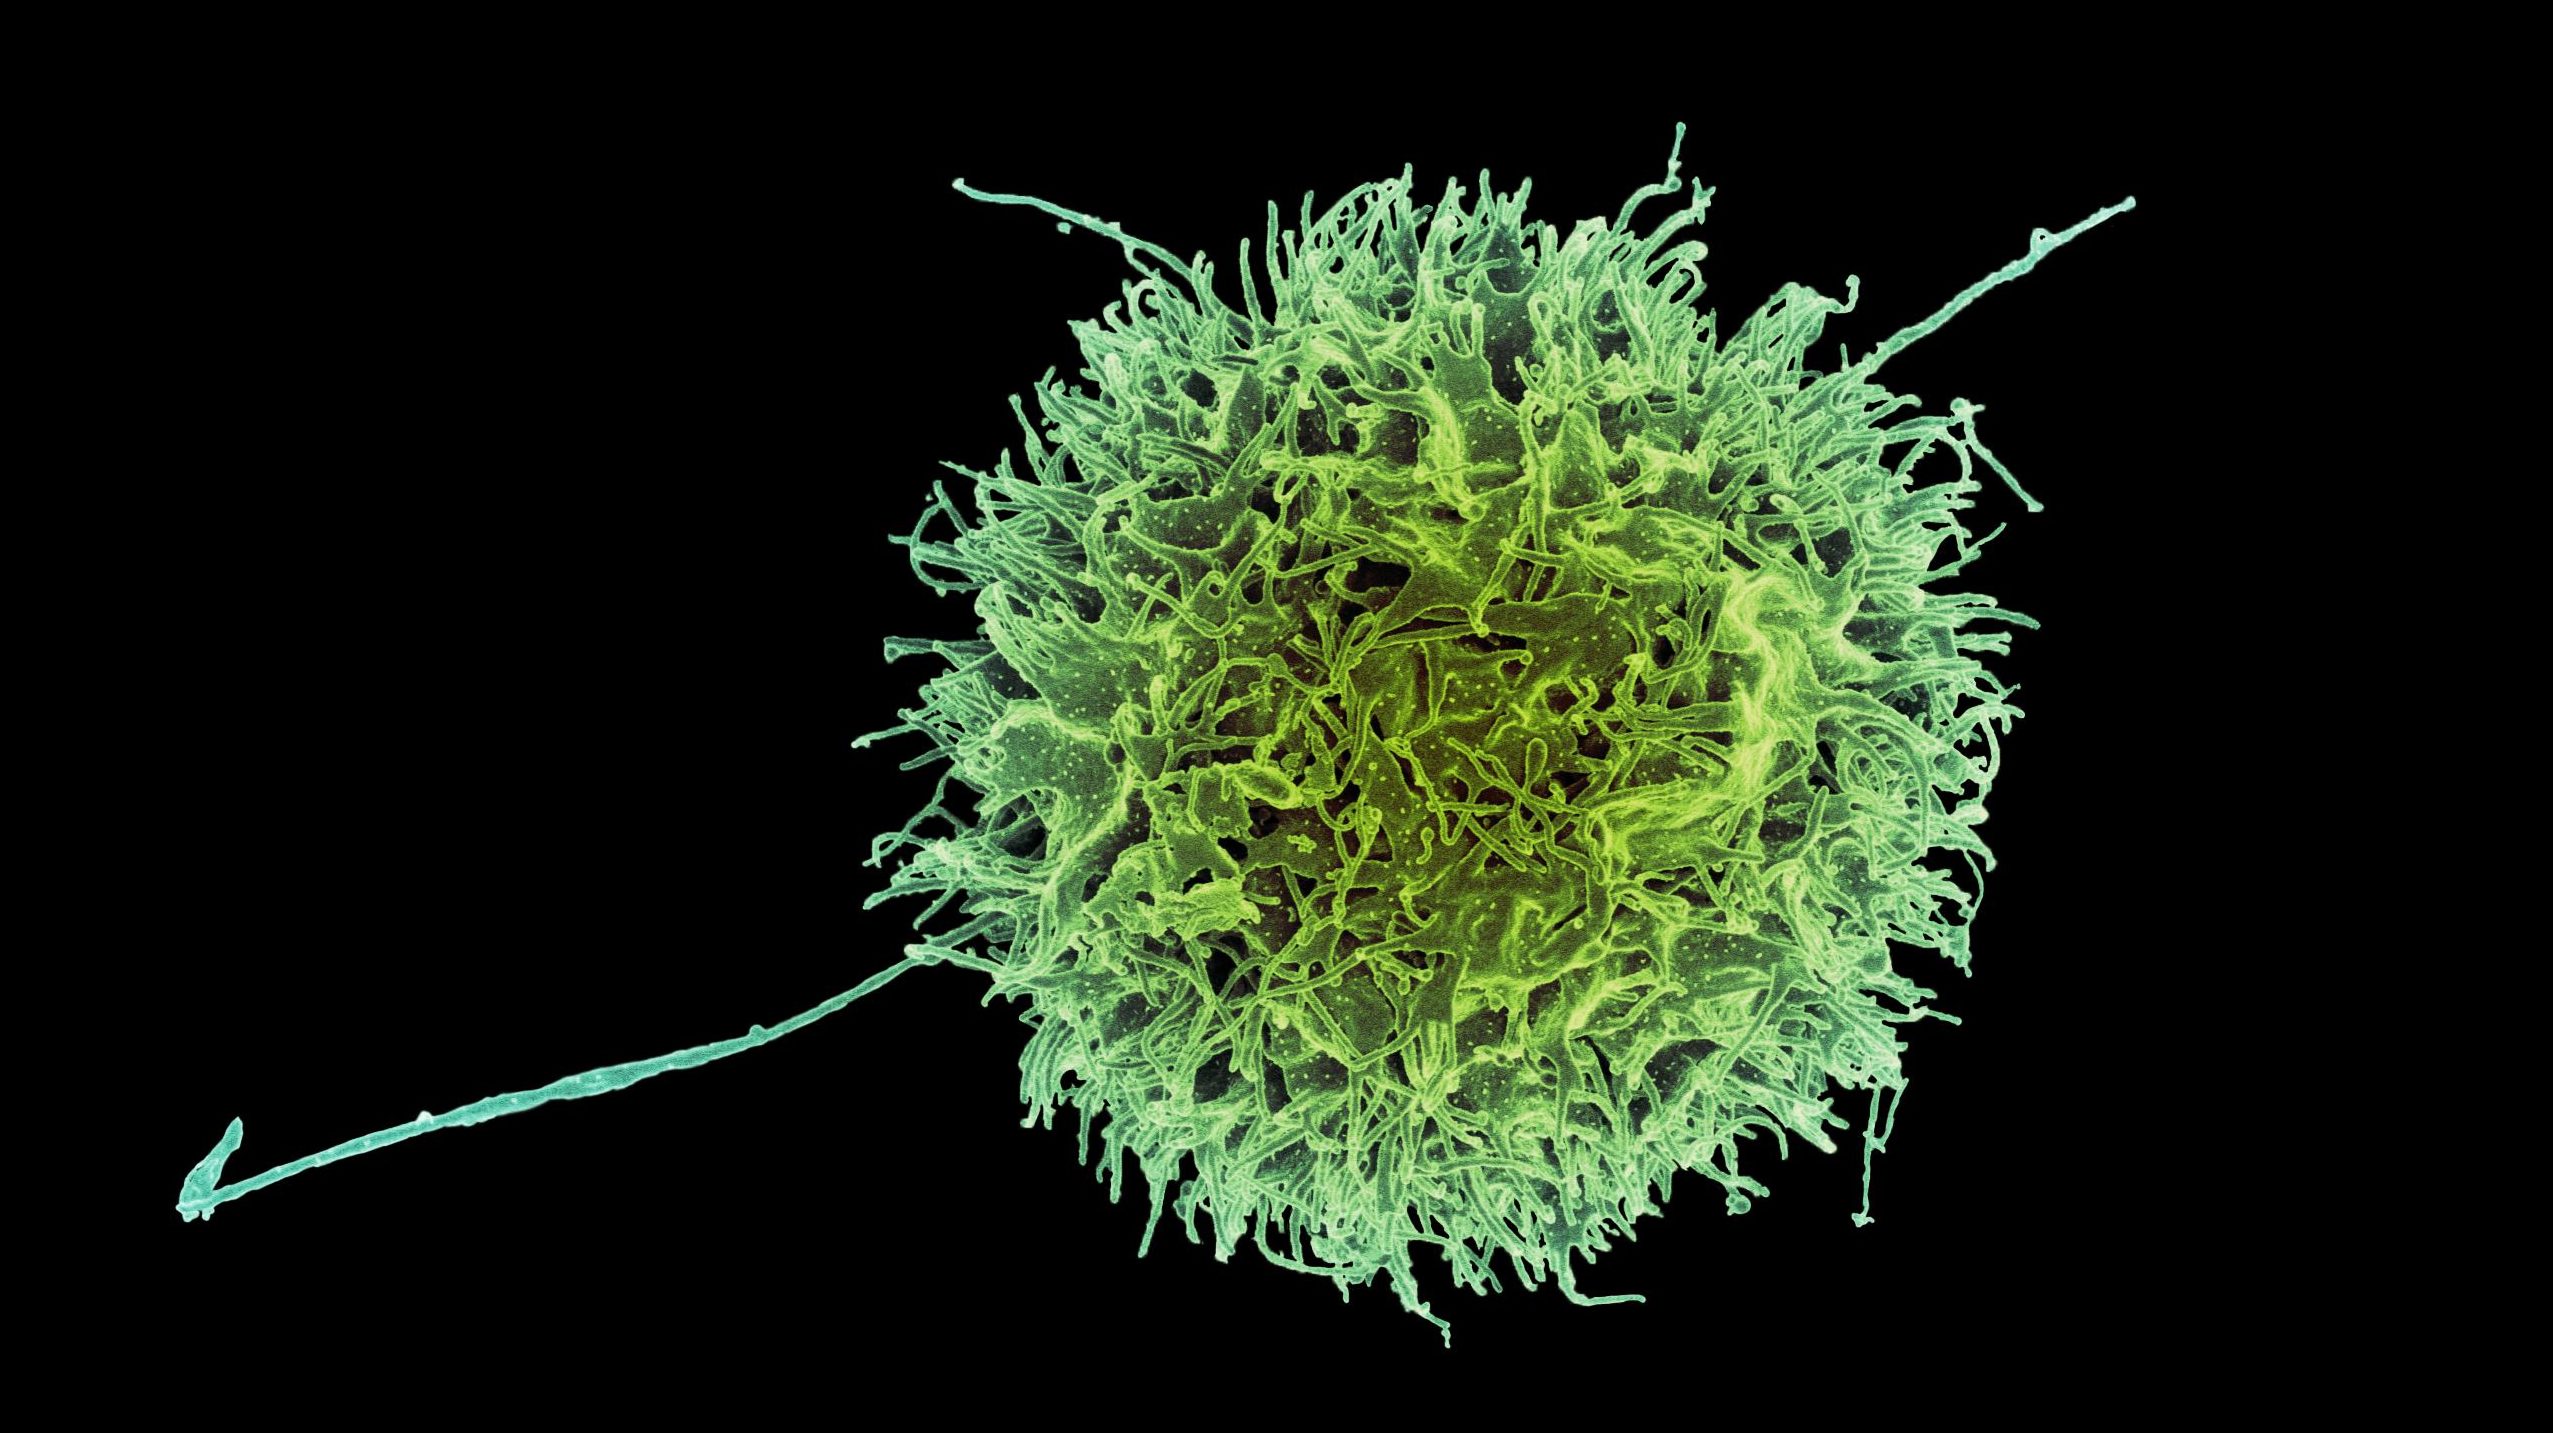 Novel Nanotechnology That Combats Cancer Cells Developed at Bar-Ilan University